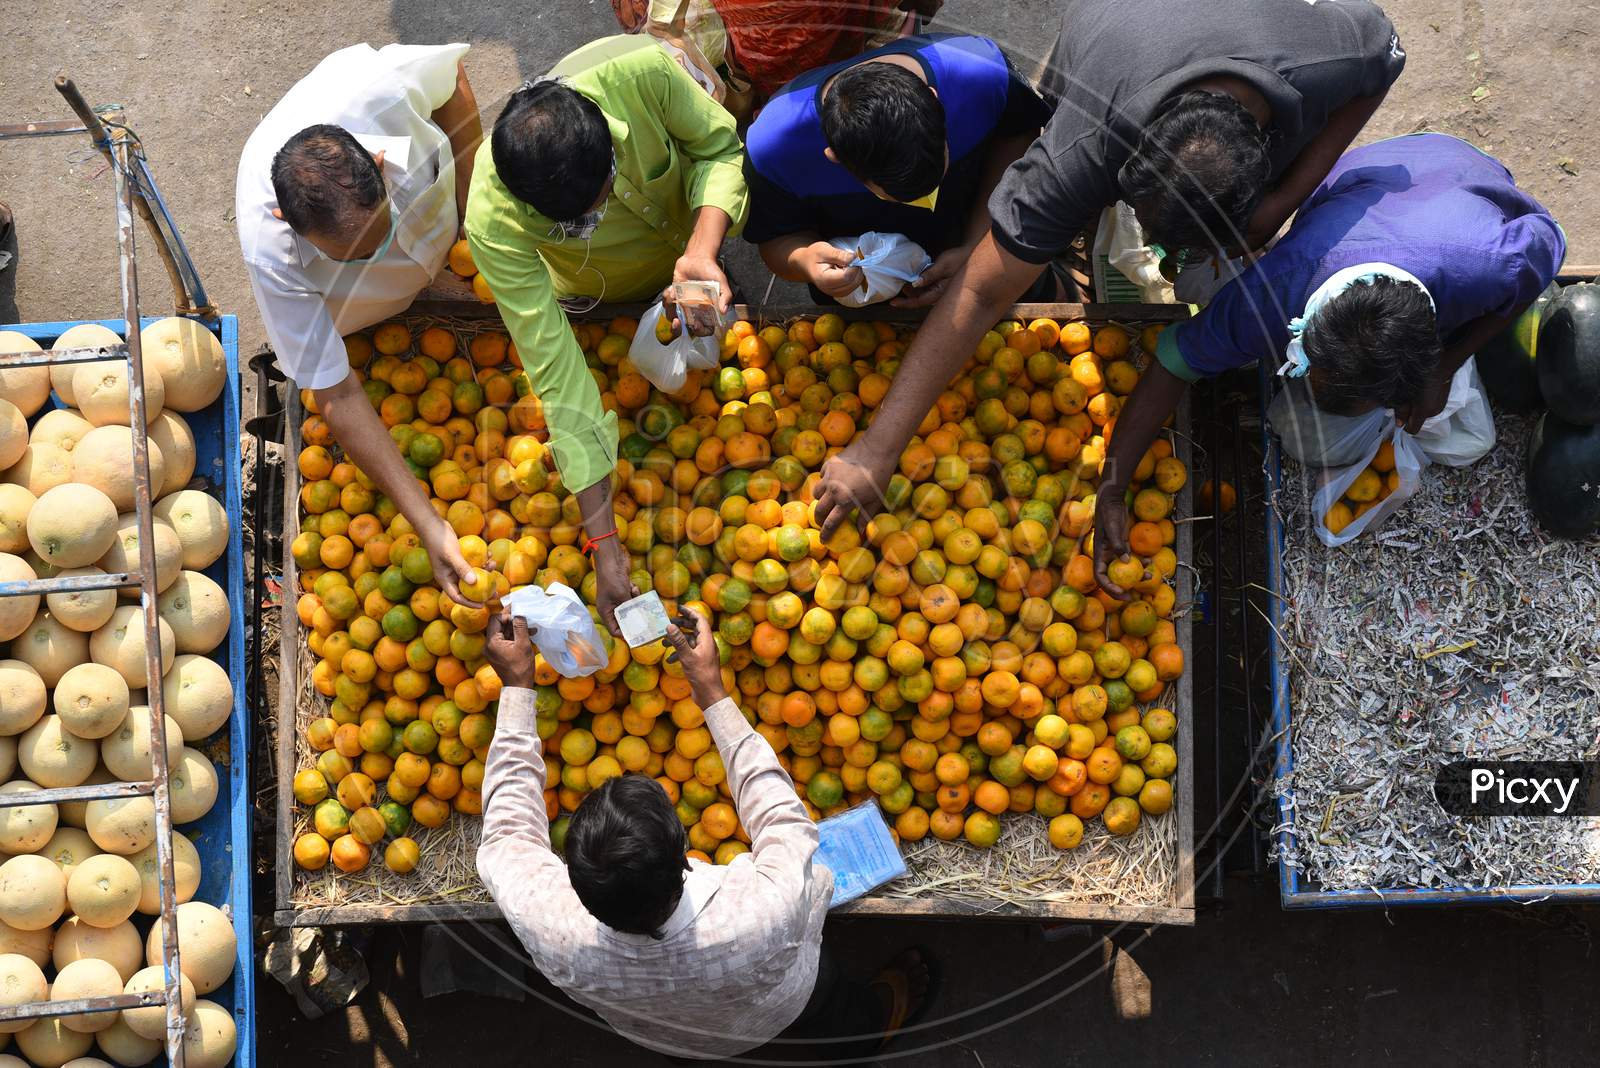 People buy citric acid rich fruits like orange, mausambi fruits to increase their immunity amid corona virus pandemic in Hyderabad